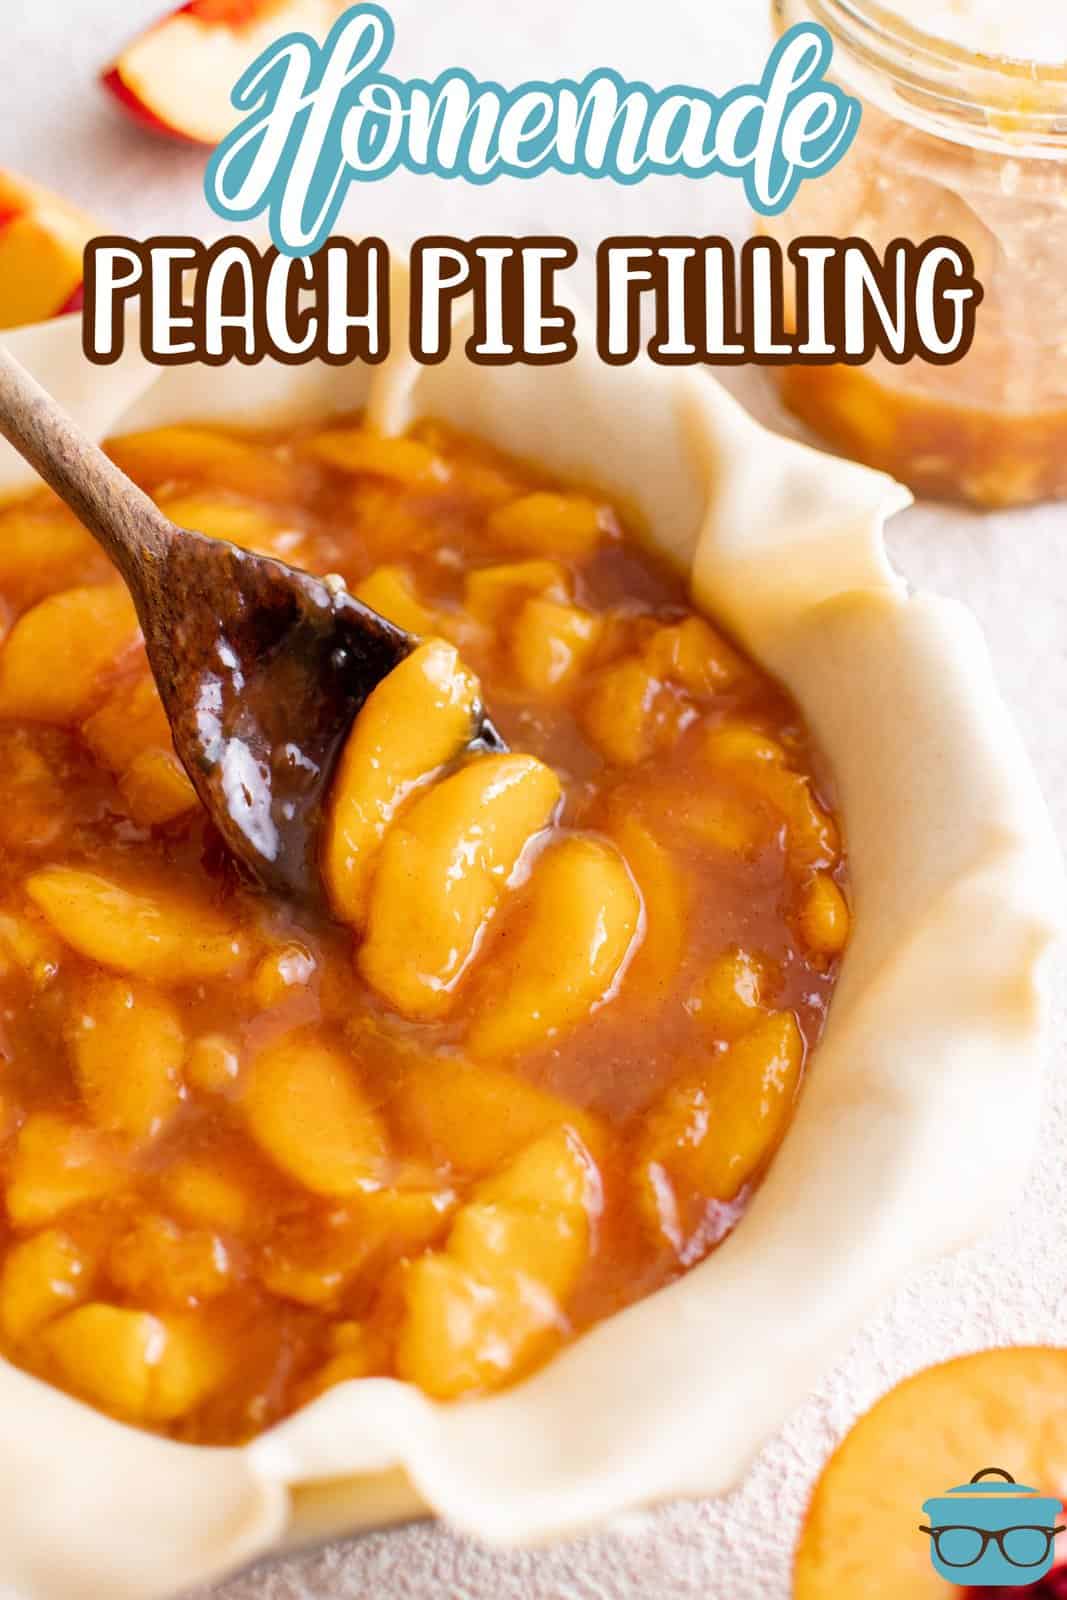 Spoon adding Homemade Peach Pie Filling into pie crust Pinterest image.